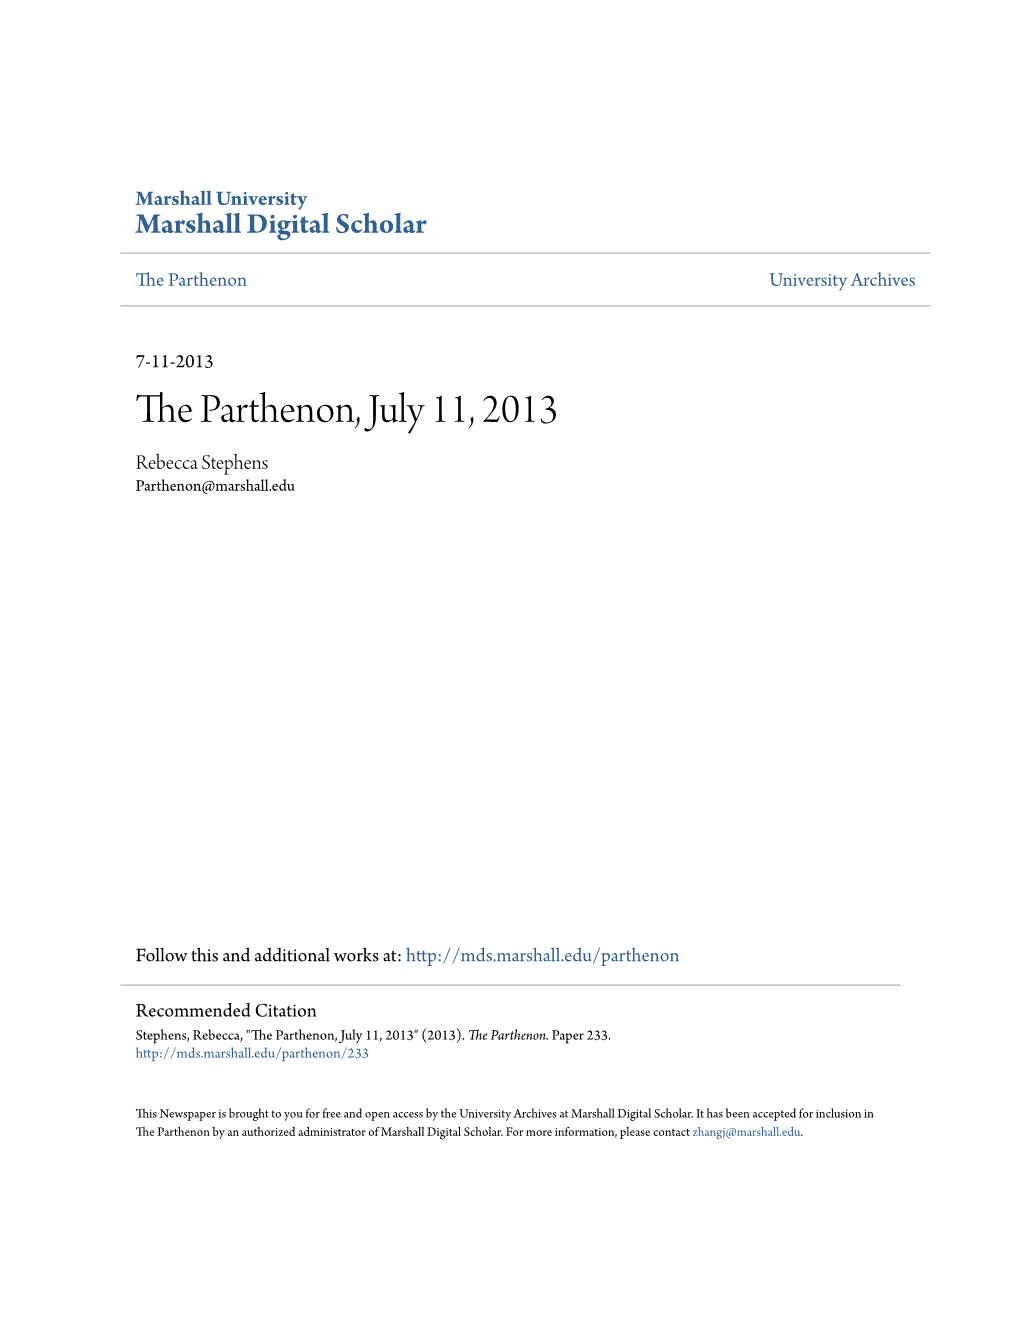 The Parthenon, July 11, 2013